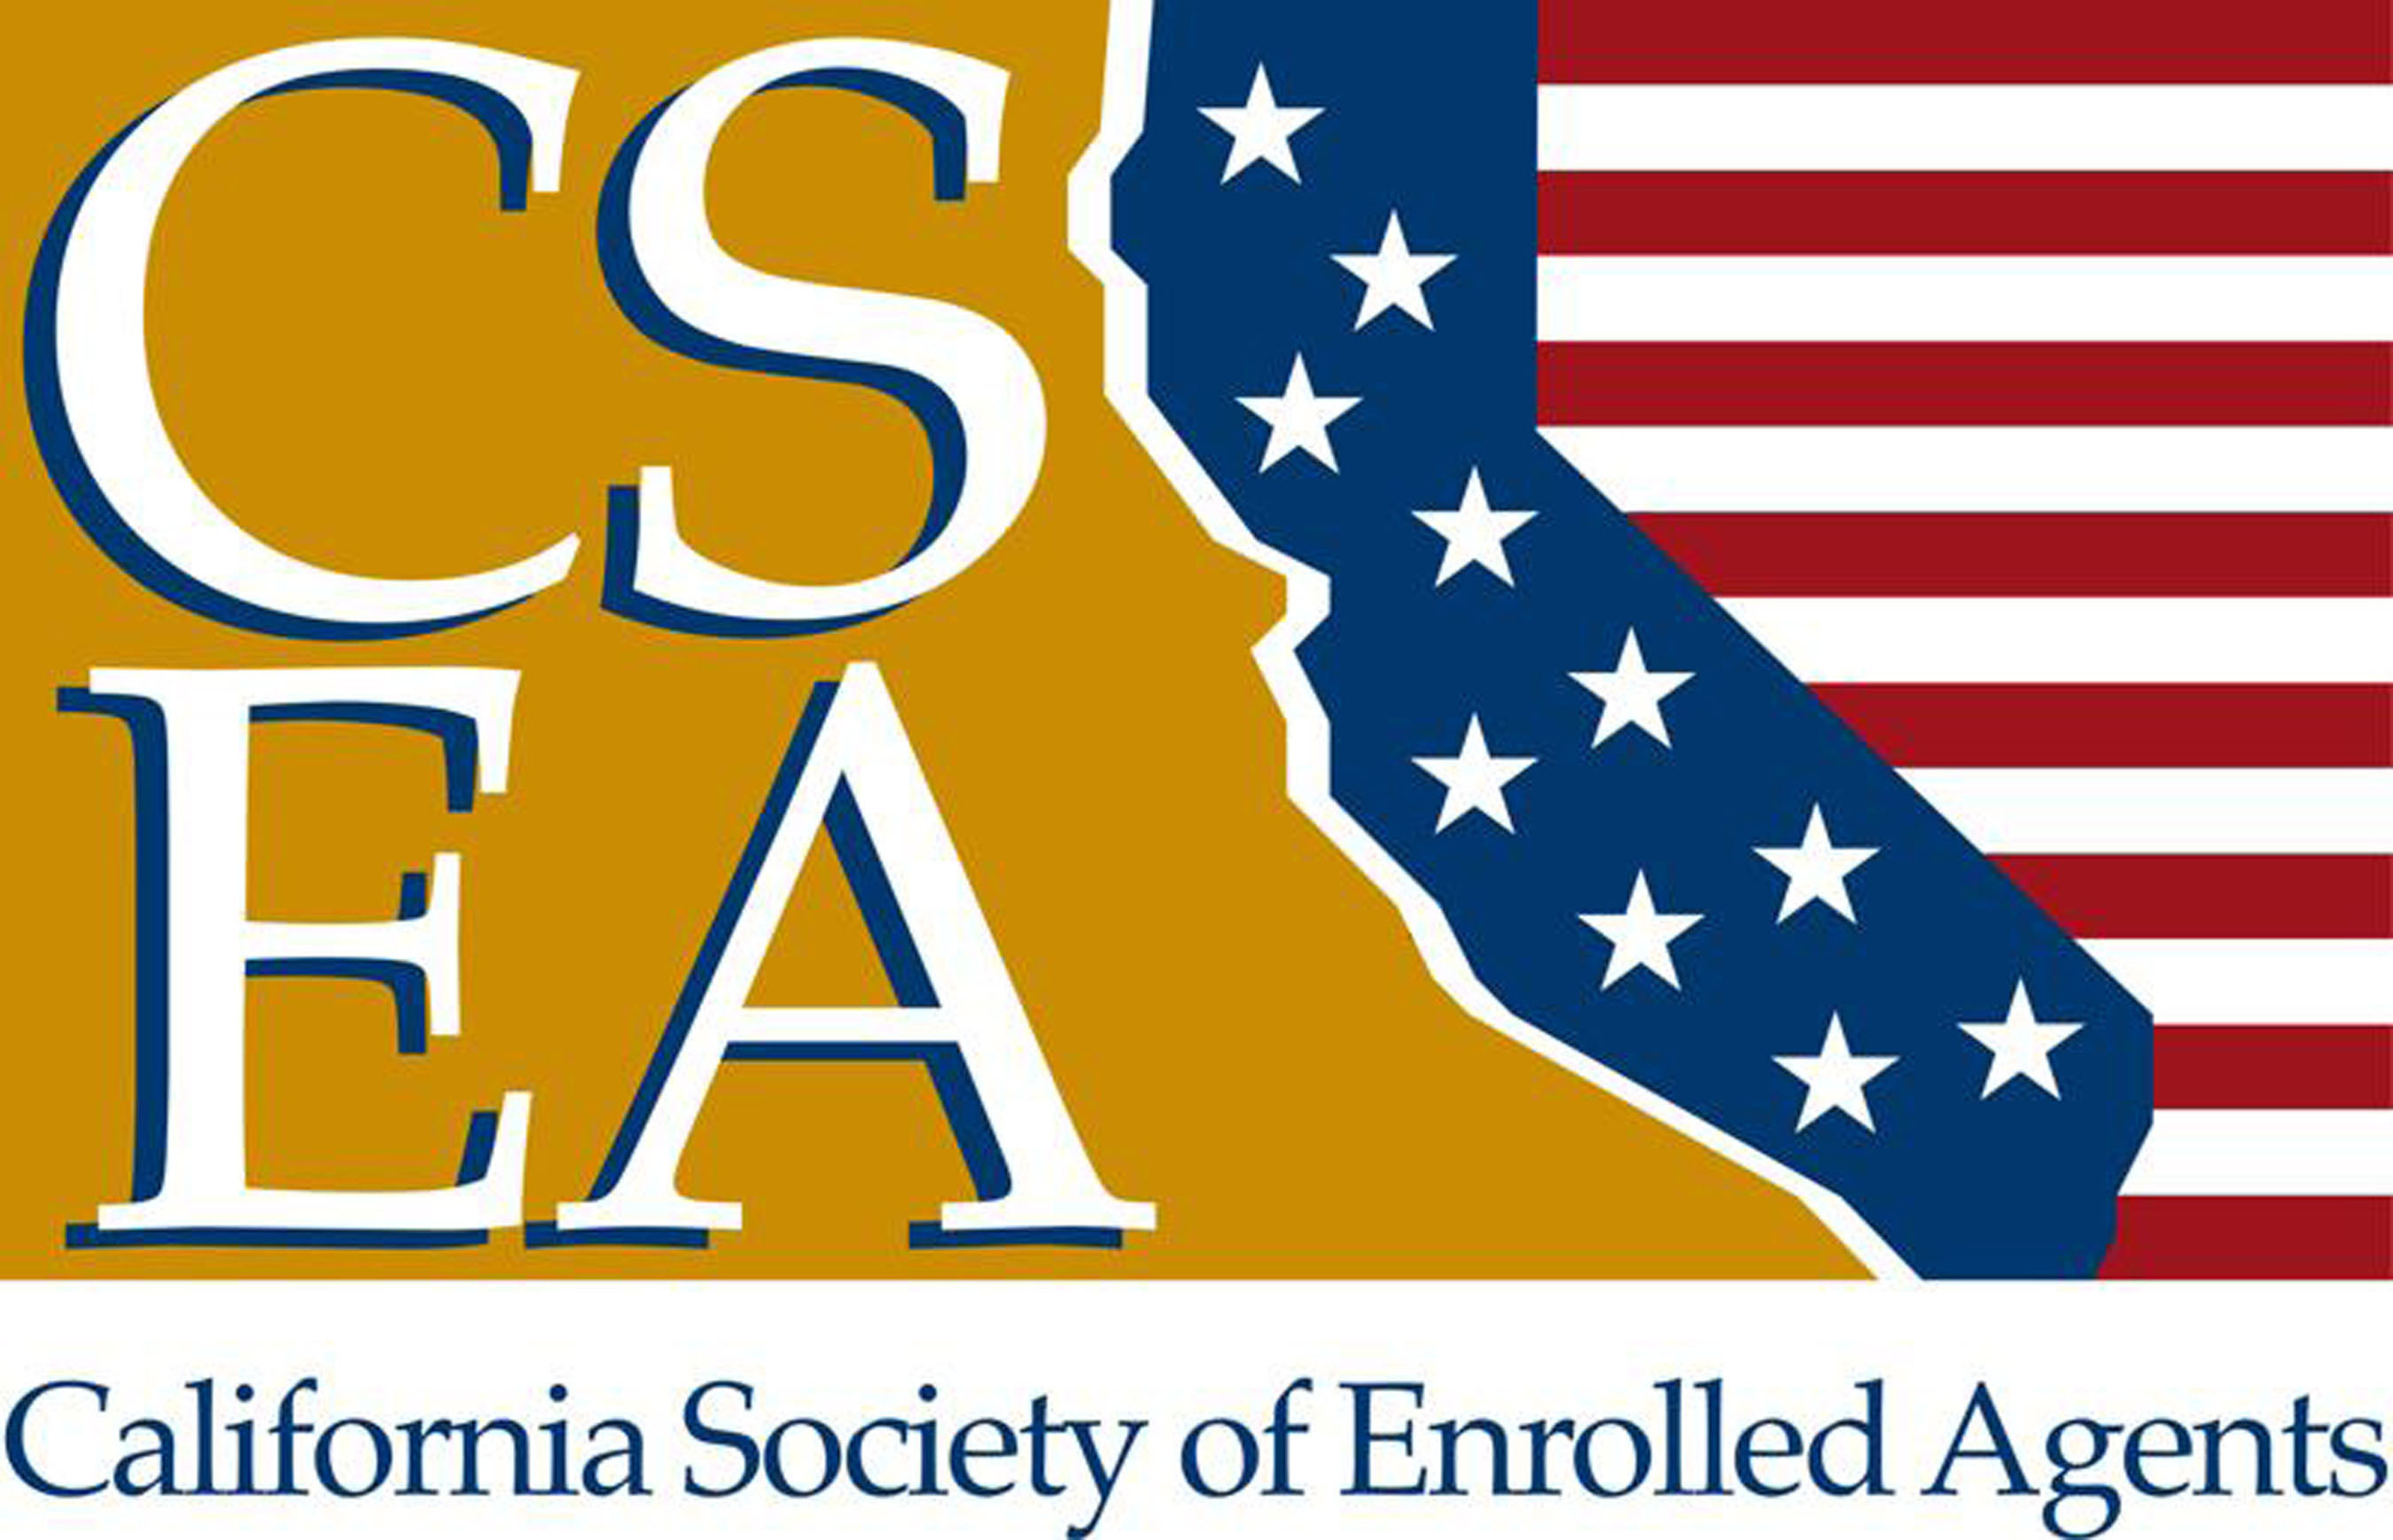 California Society of Enrolled Agents Logo. (PRNewsFoto/California Society of Enrolled Agents) (PRNewsFoto/)